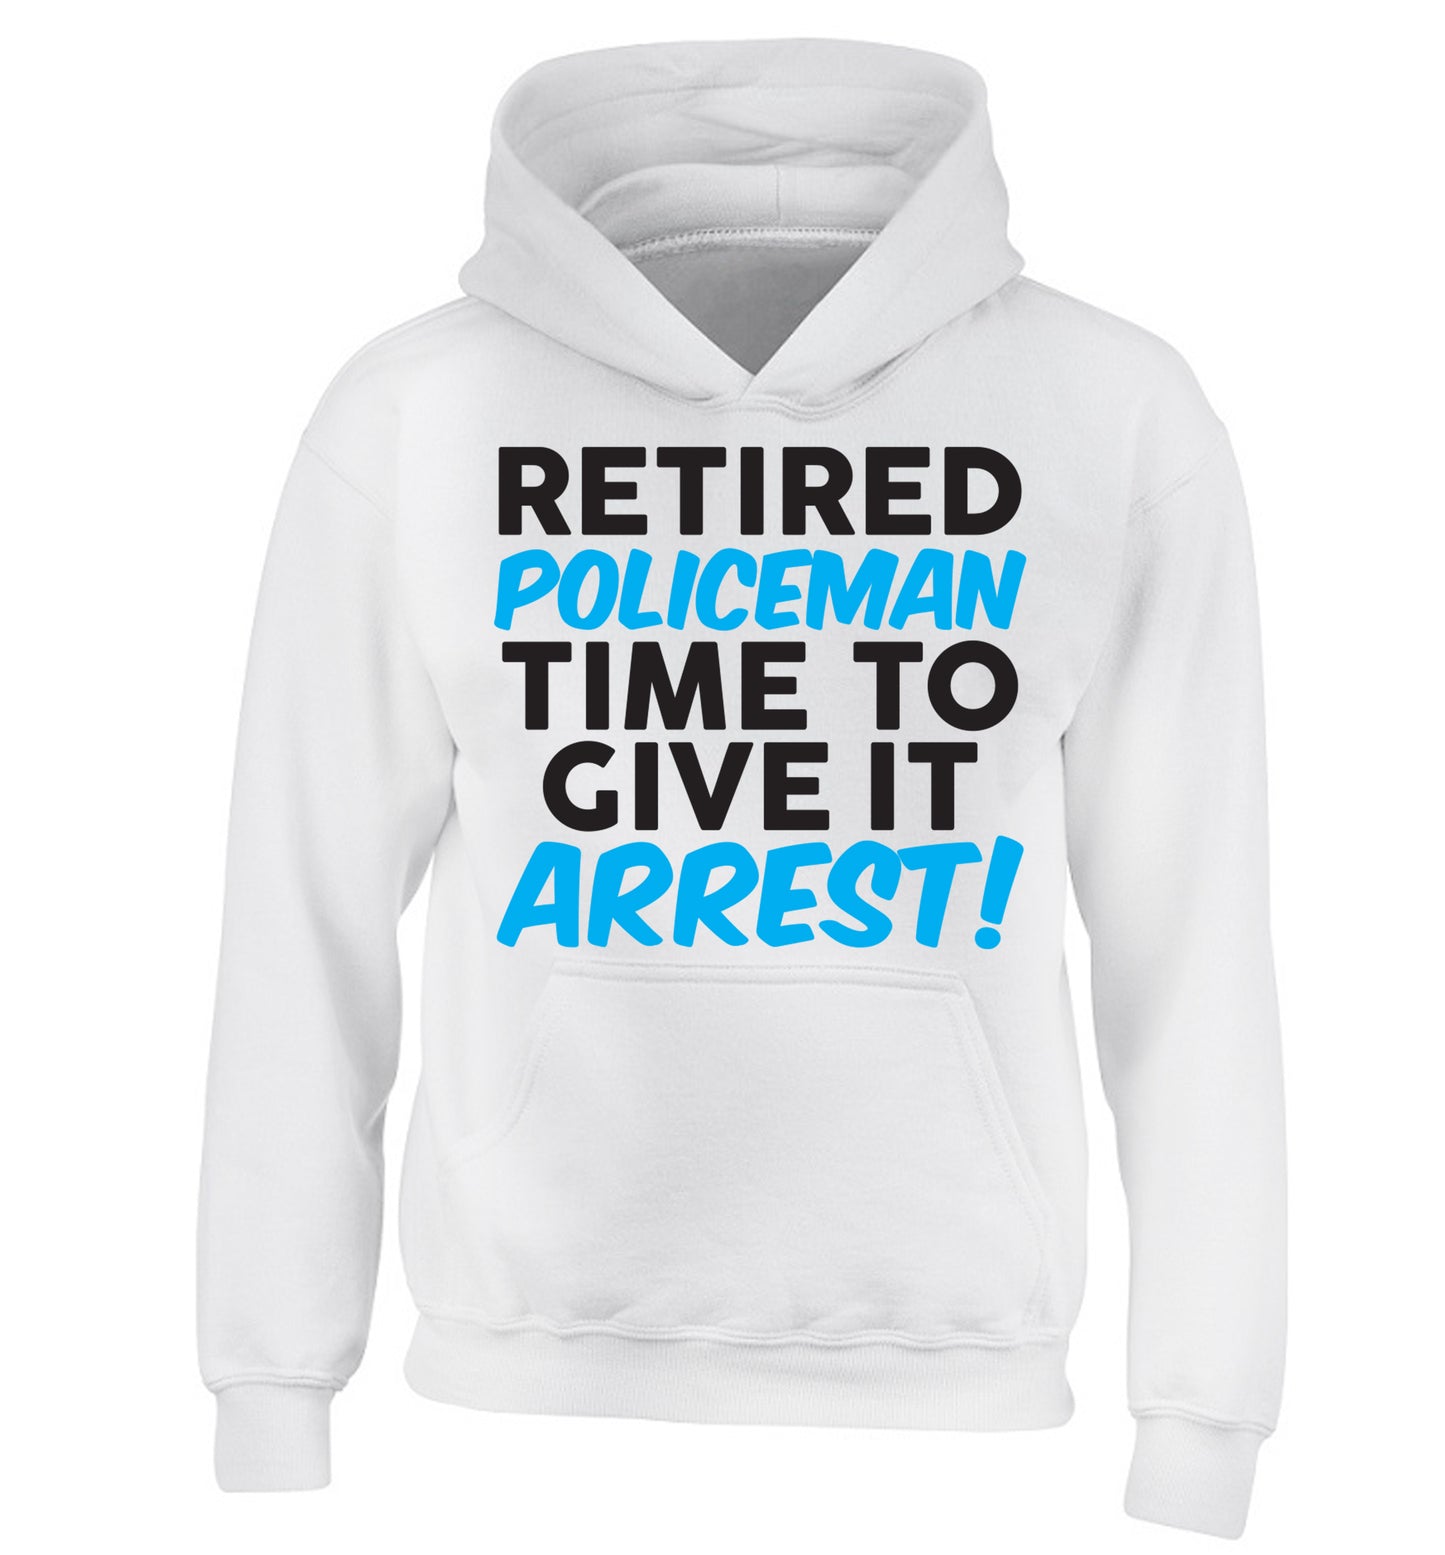 Retired policeman give it arresst! children's white hoodie 12-13 Years